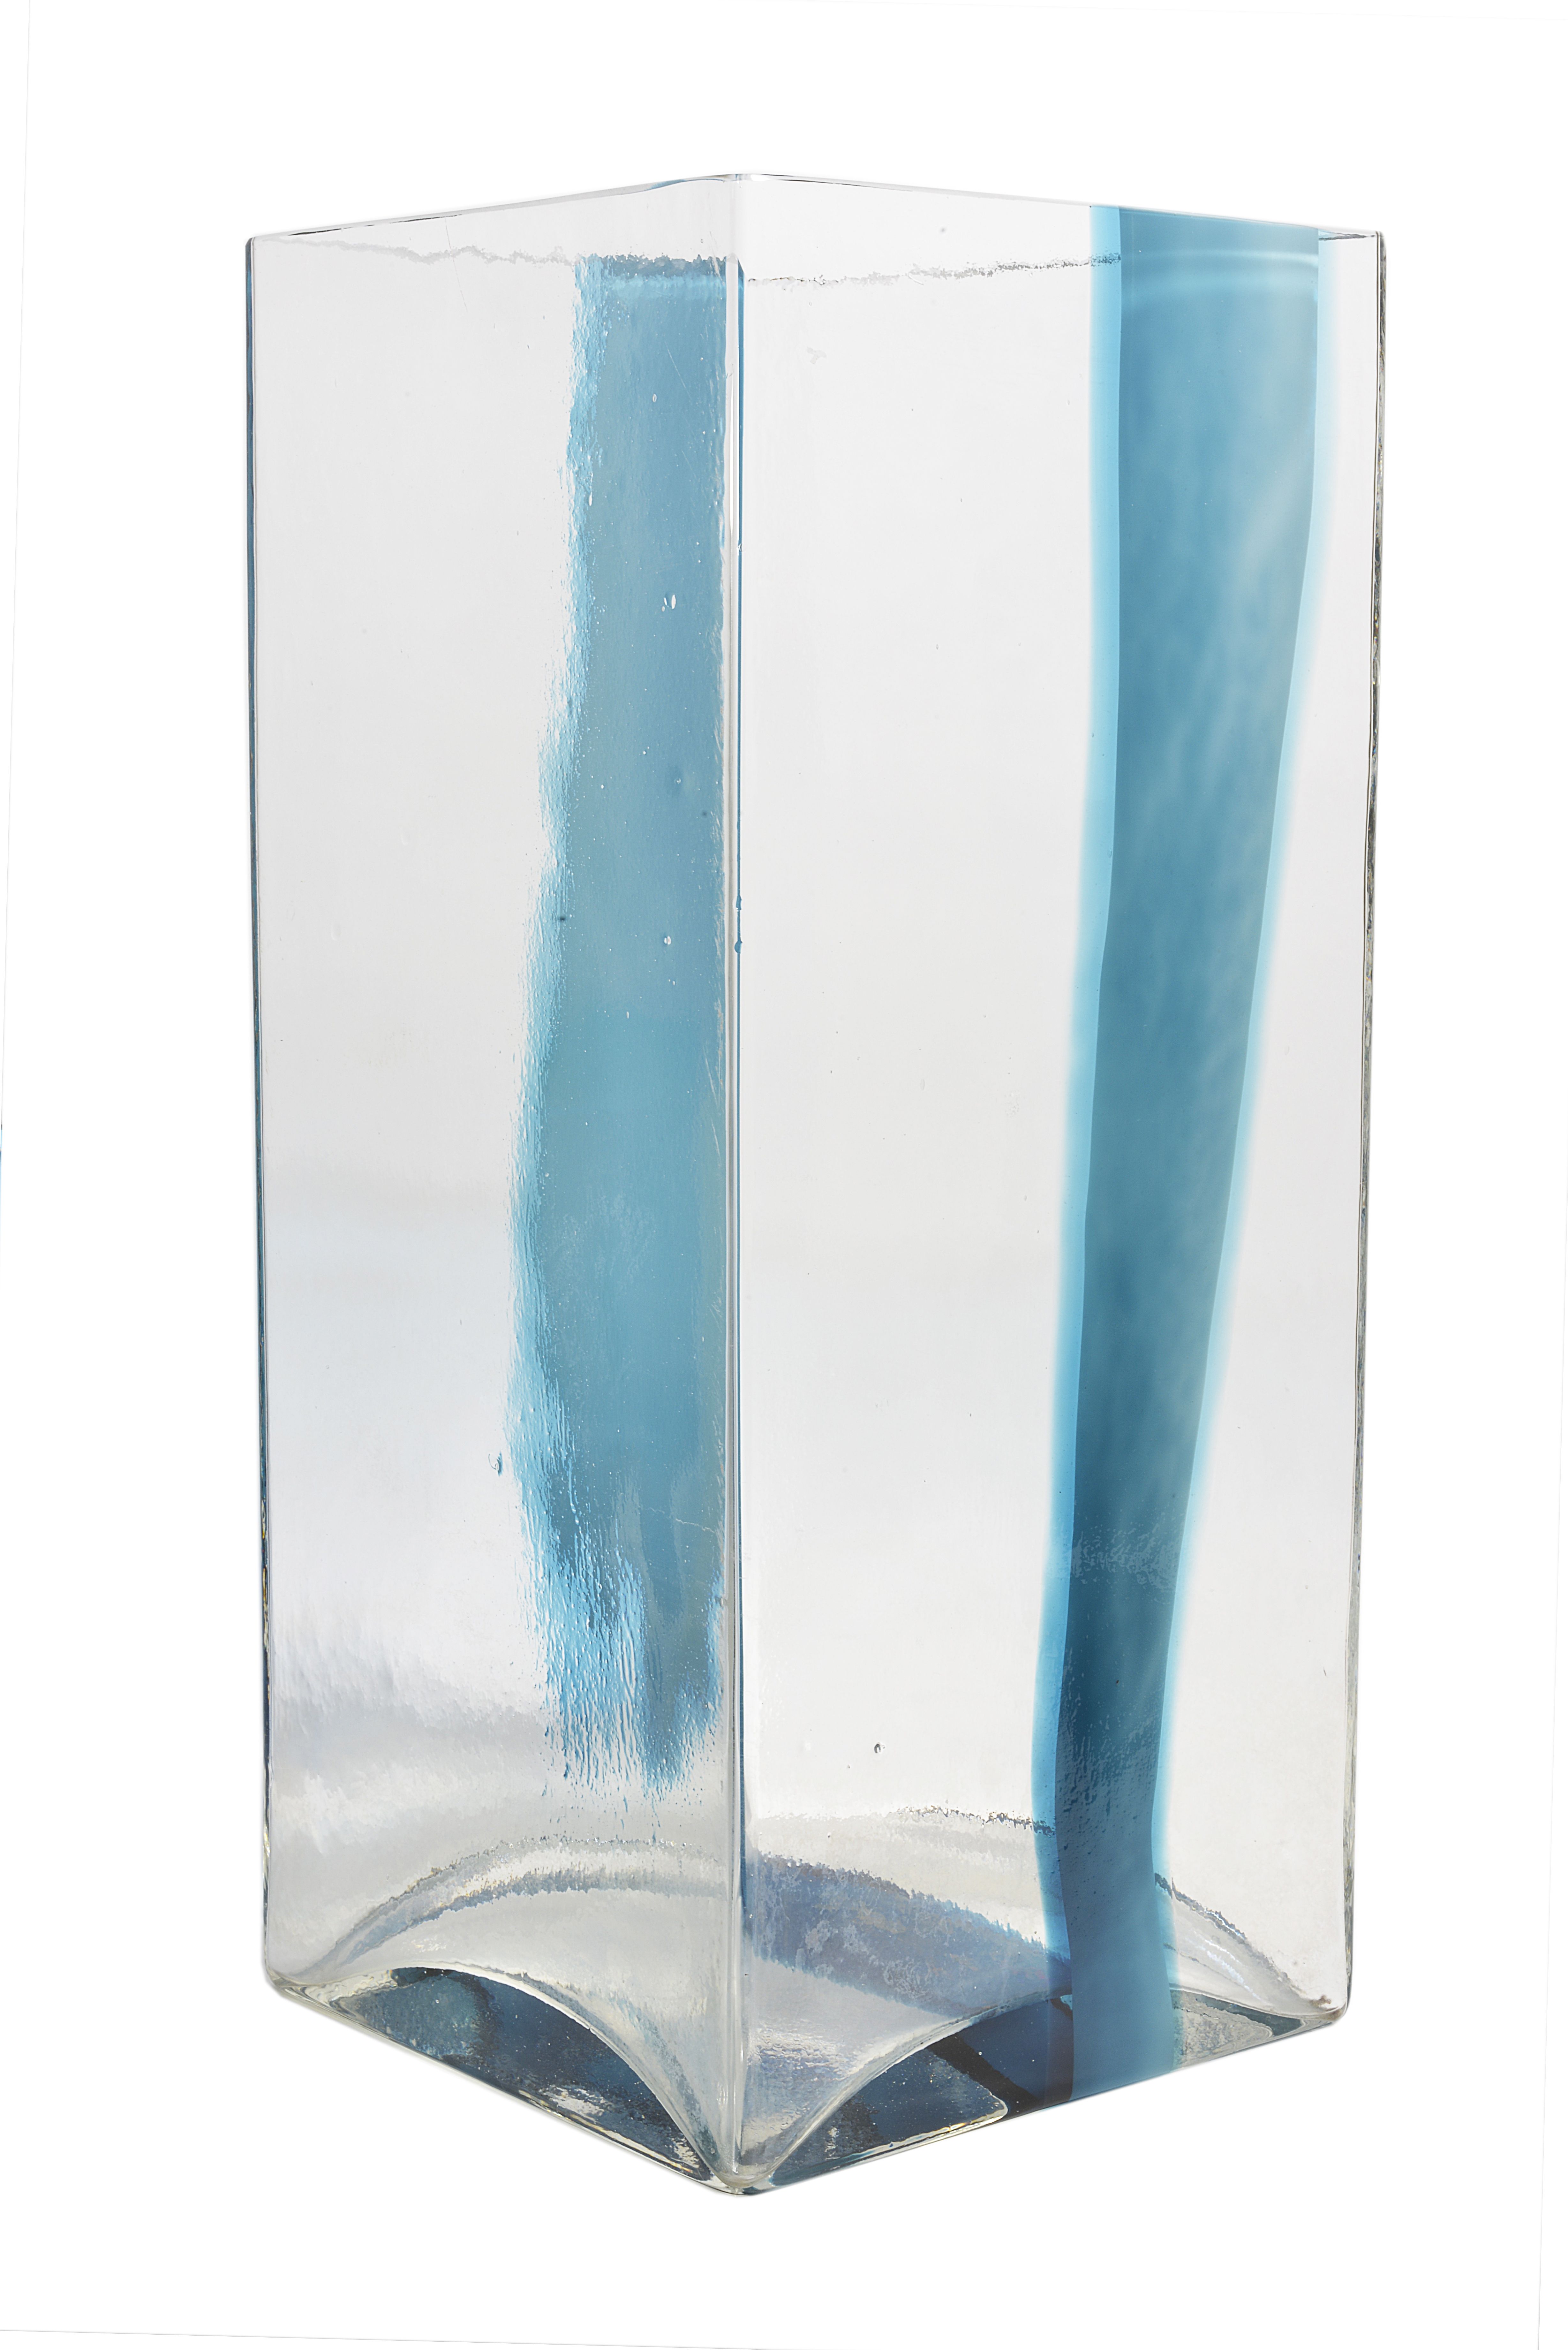 Ludovico Diaz de Santillana (1931-1989) for Pierre Cardin 
1969 
blue vase of square form